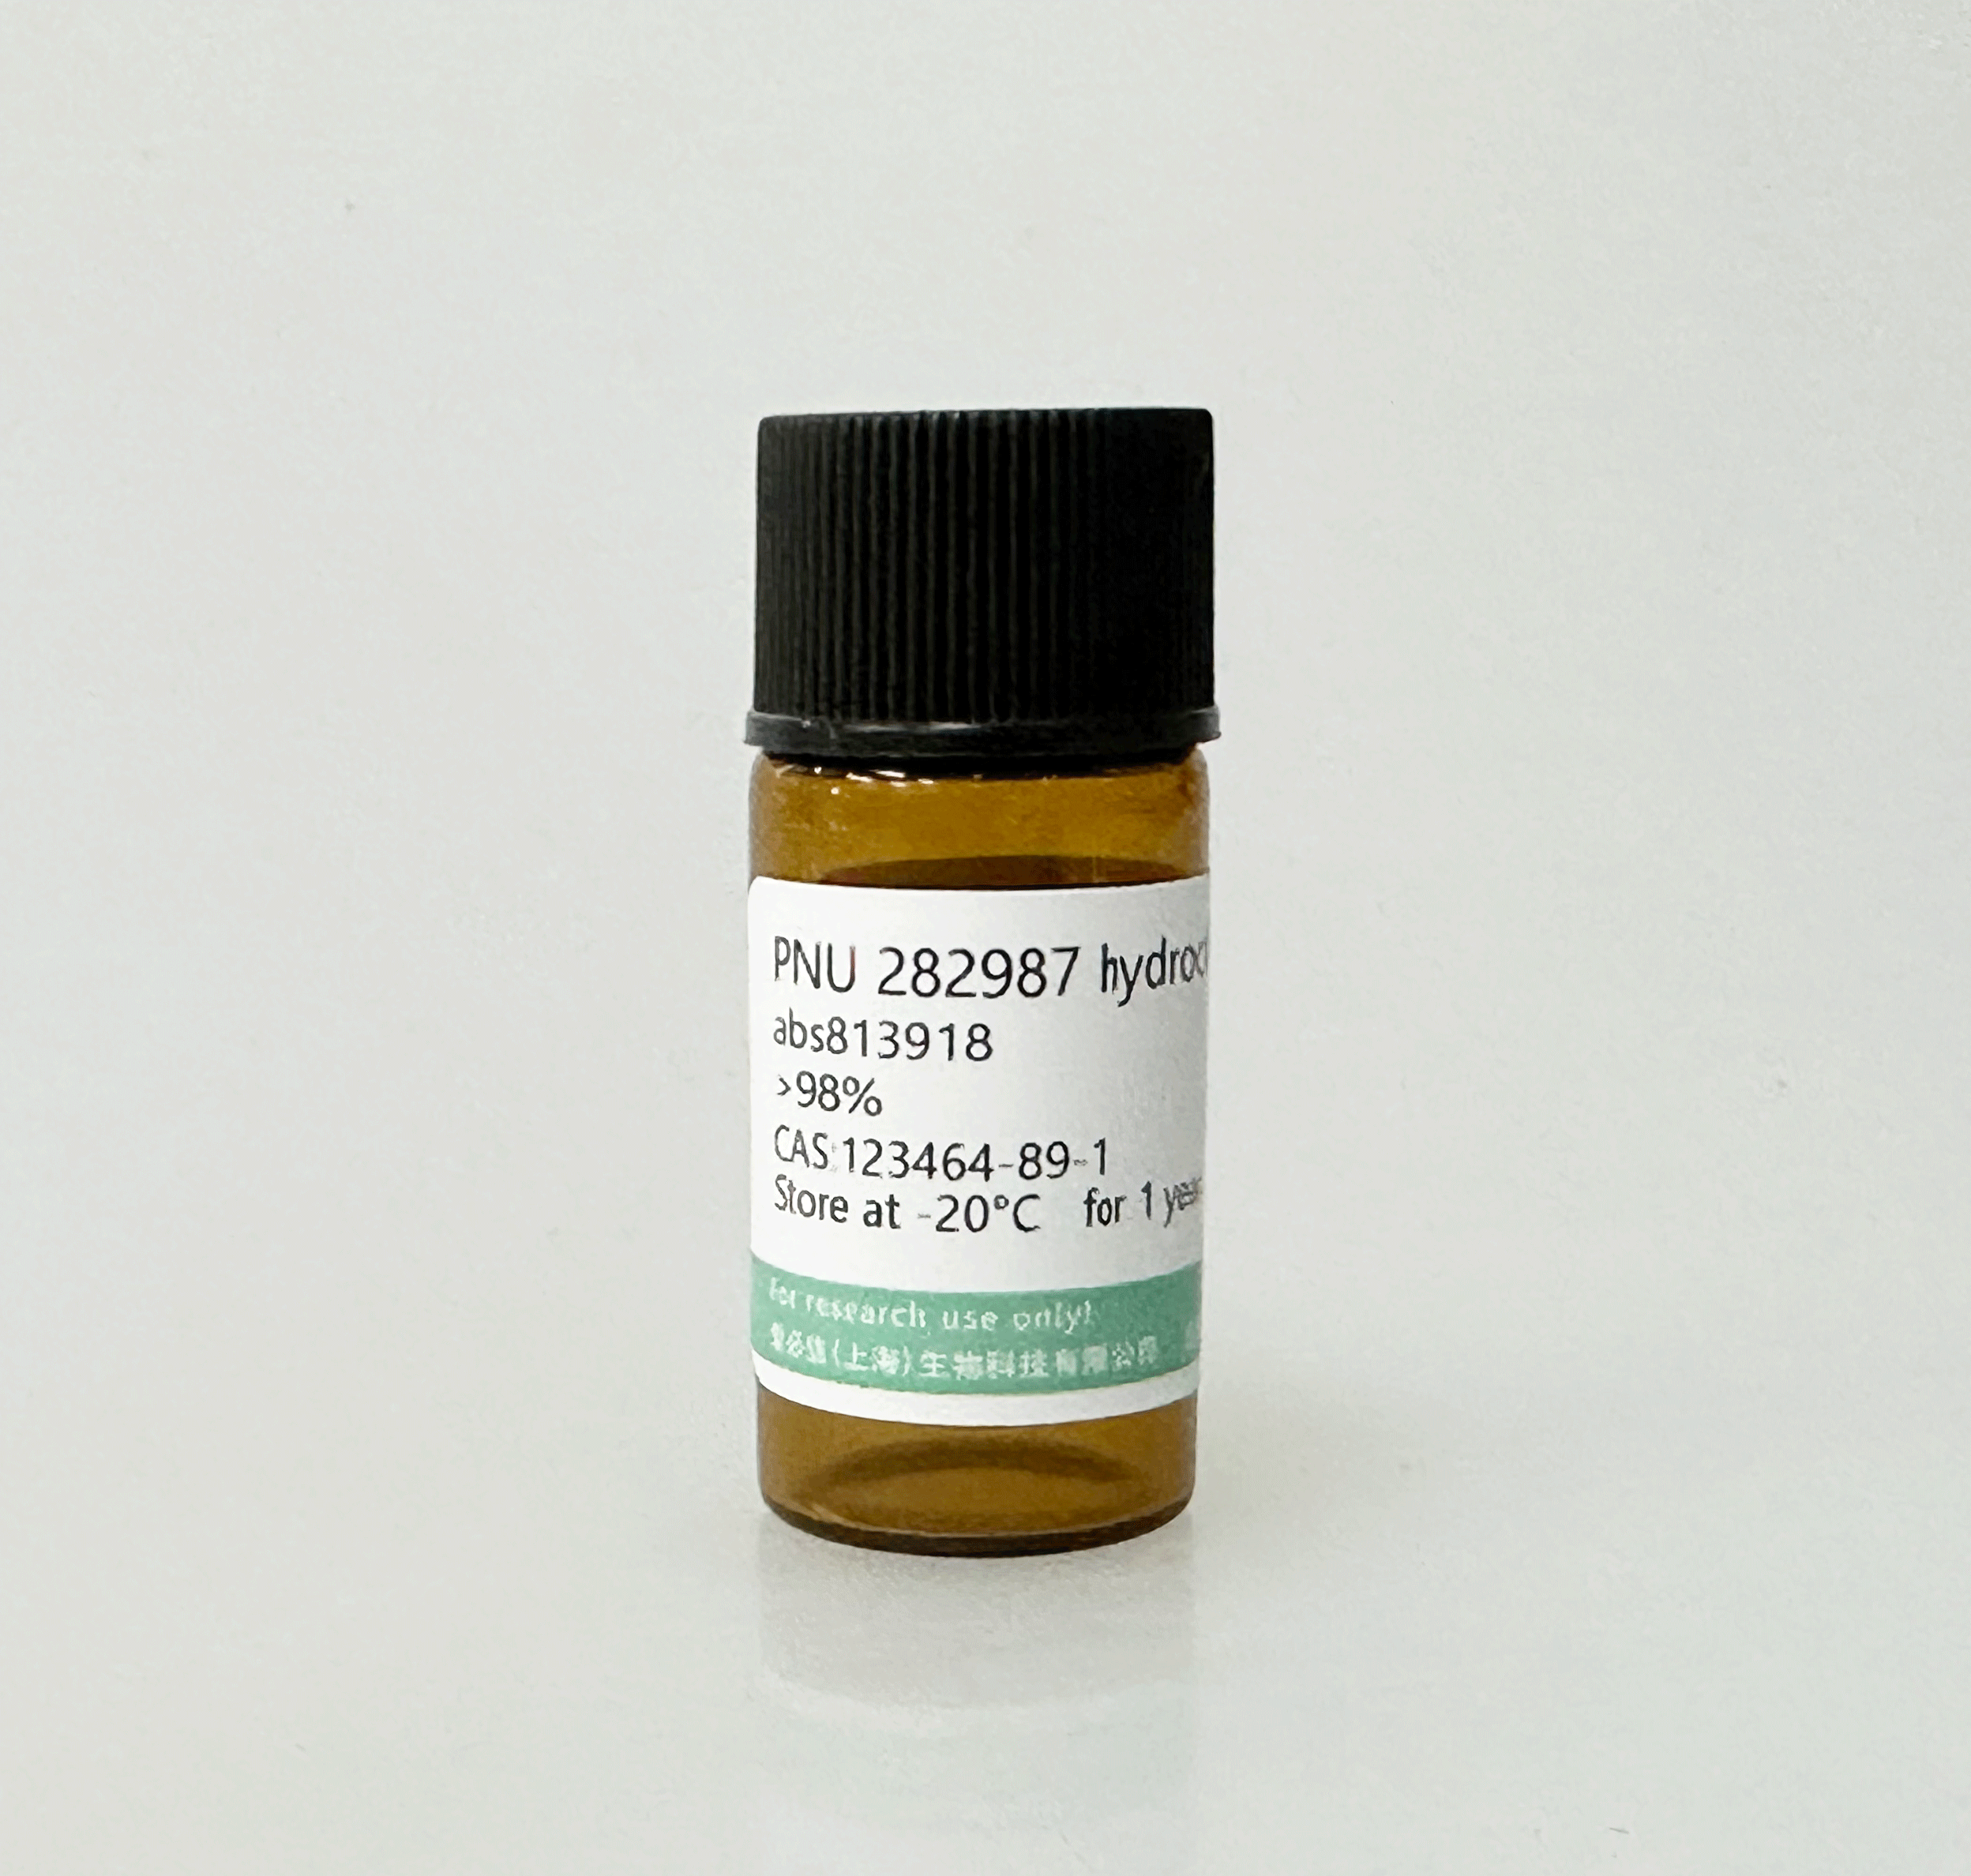 PNU 282987 hydrochloride